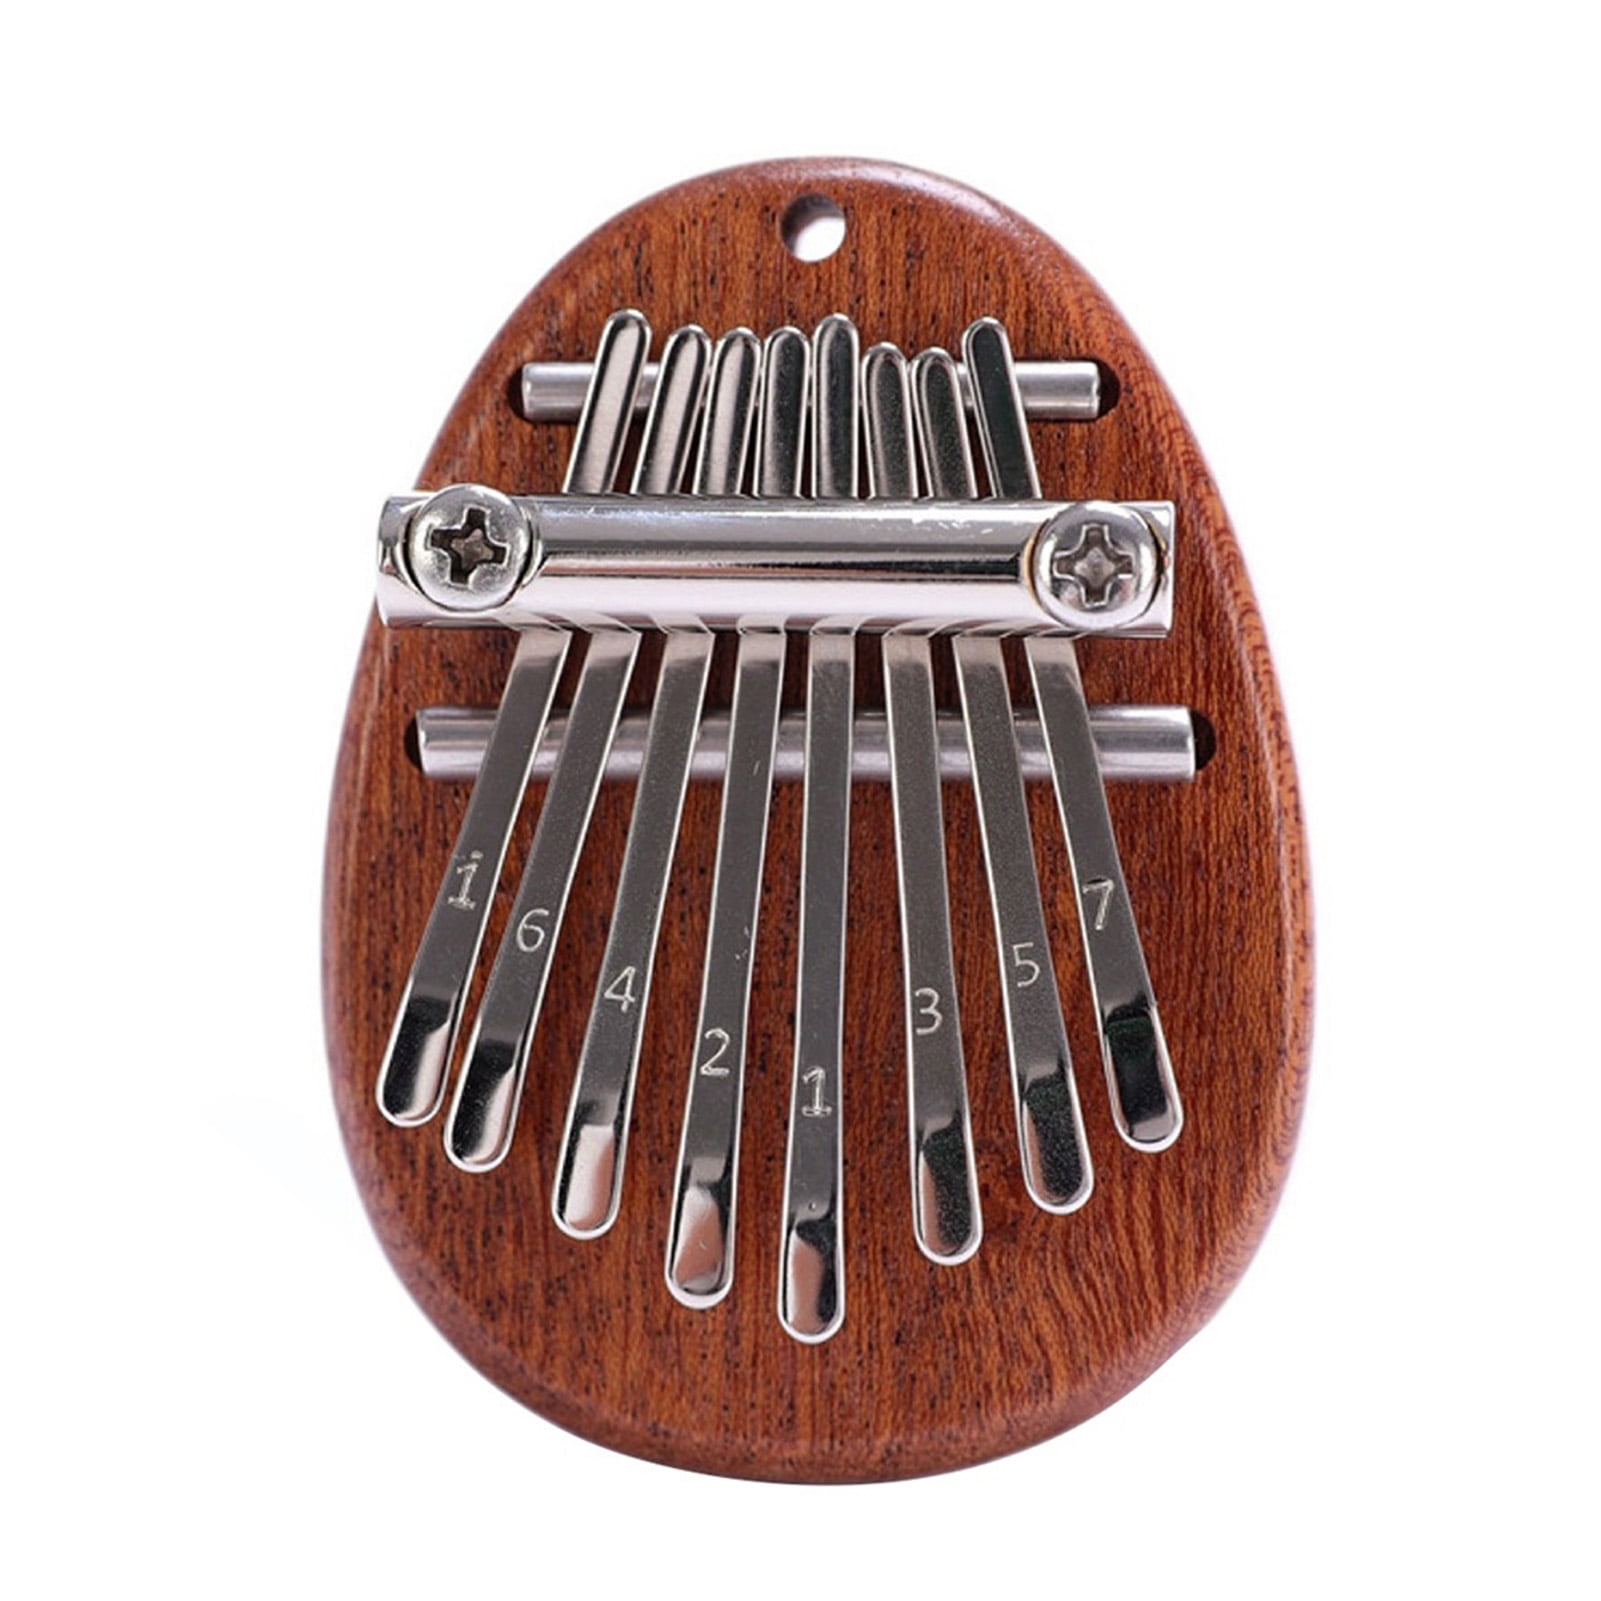 8 Key Kalimba Mini Portable Thumb Piano Finger Percussion Keyboard 